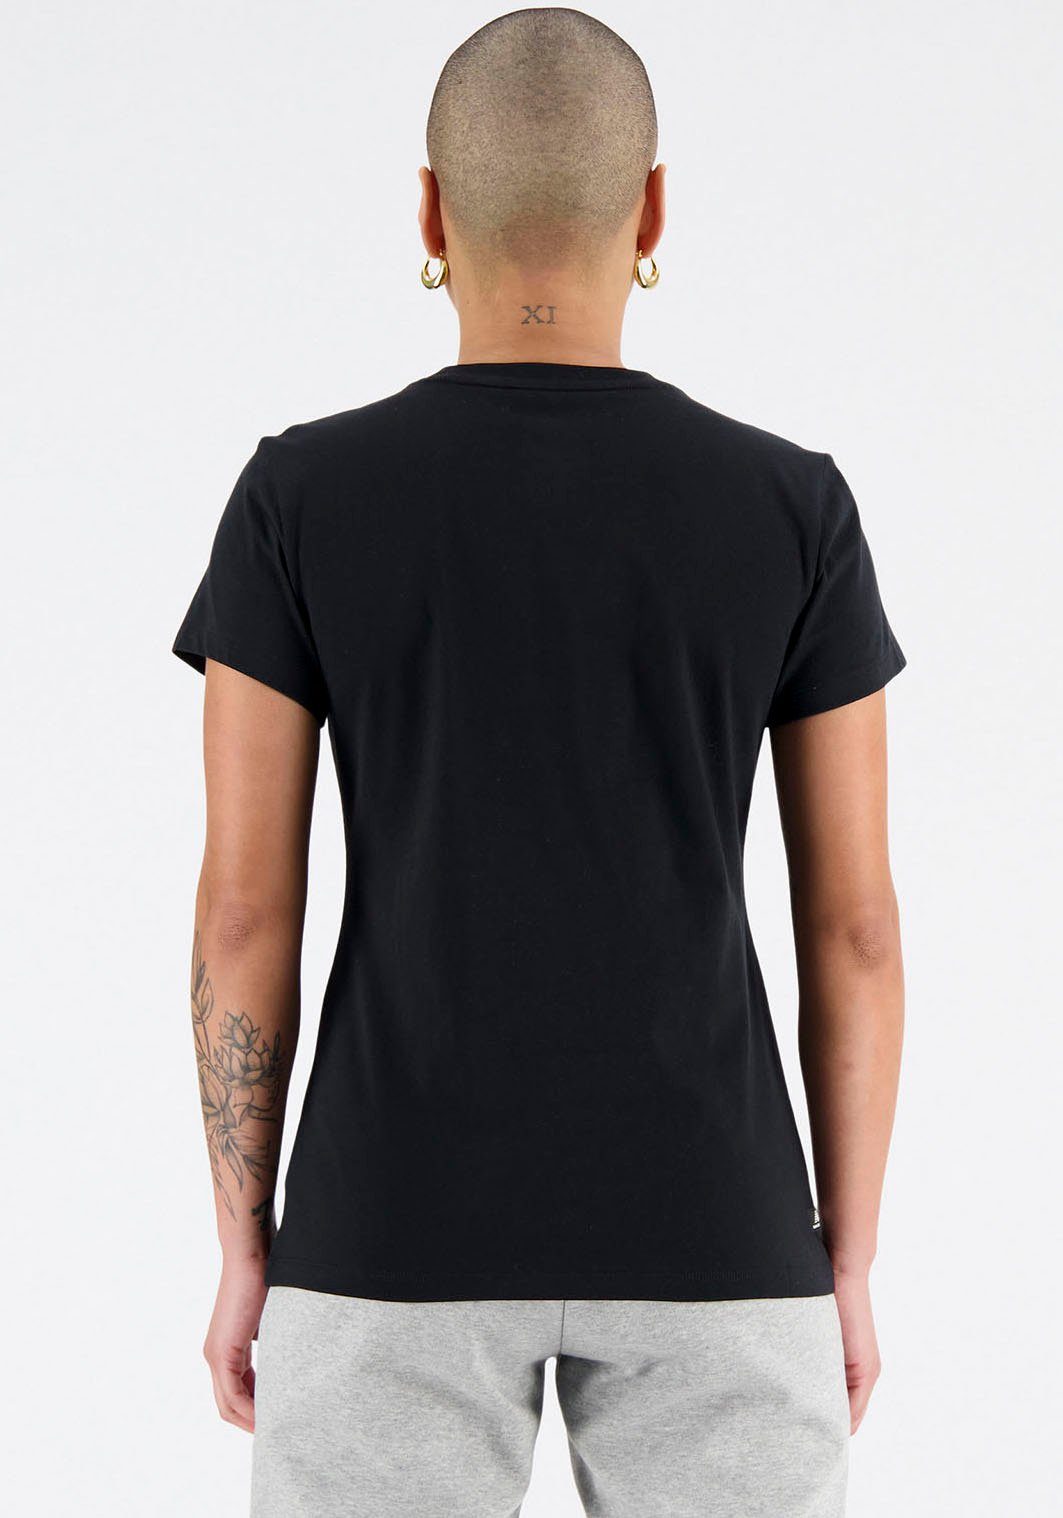 Balance 001 black T-Shirt New